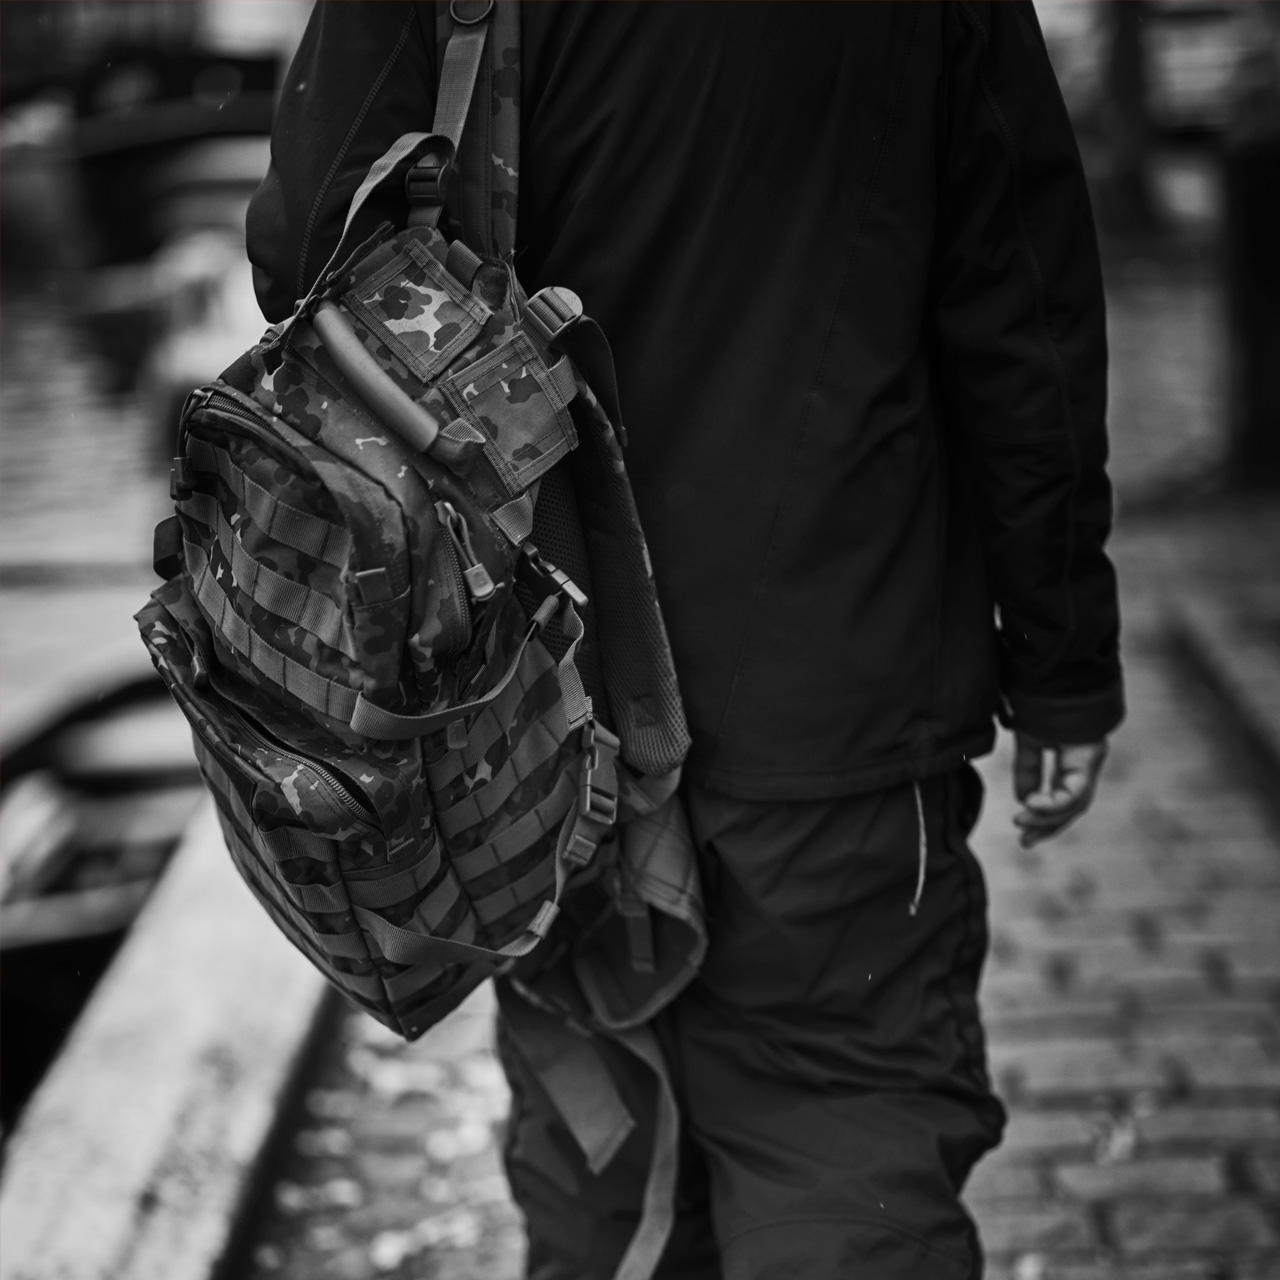 Tidligere hjemløs går på brosten med rygsæk